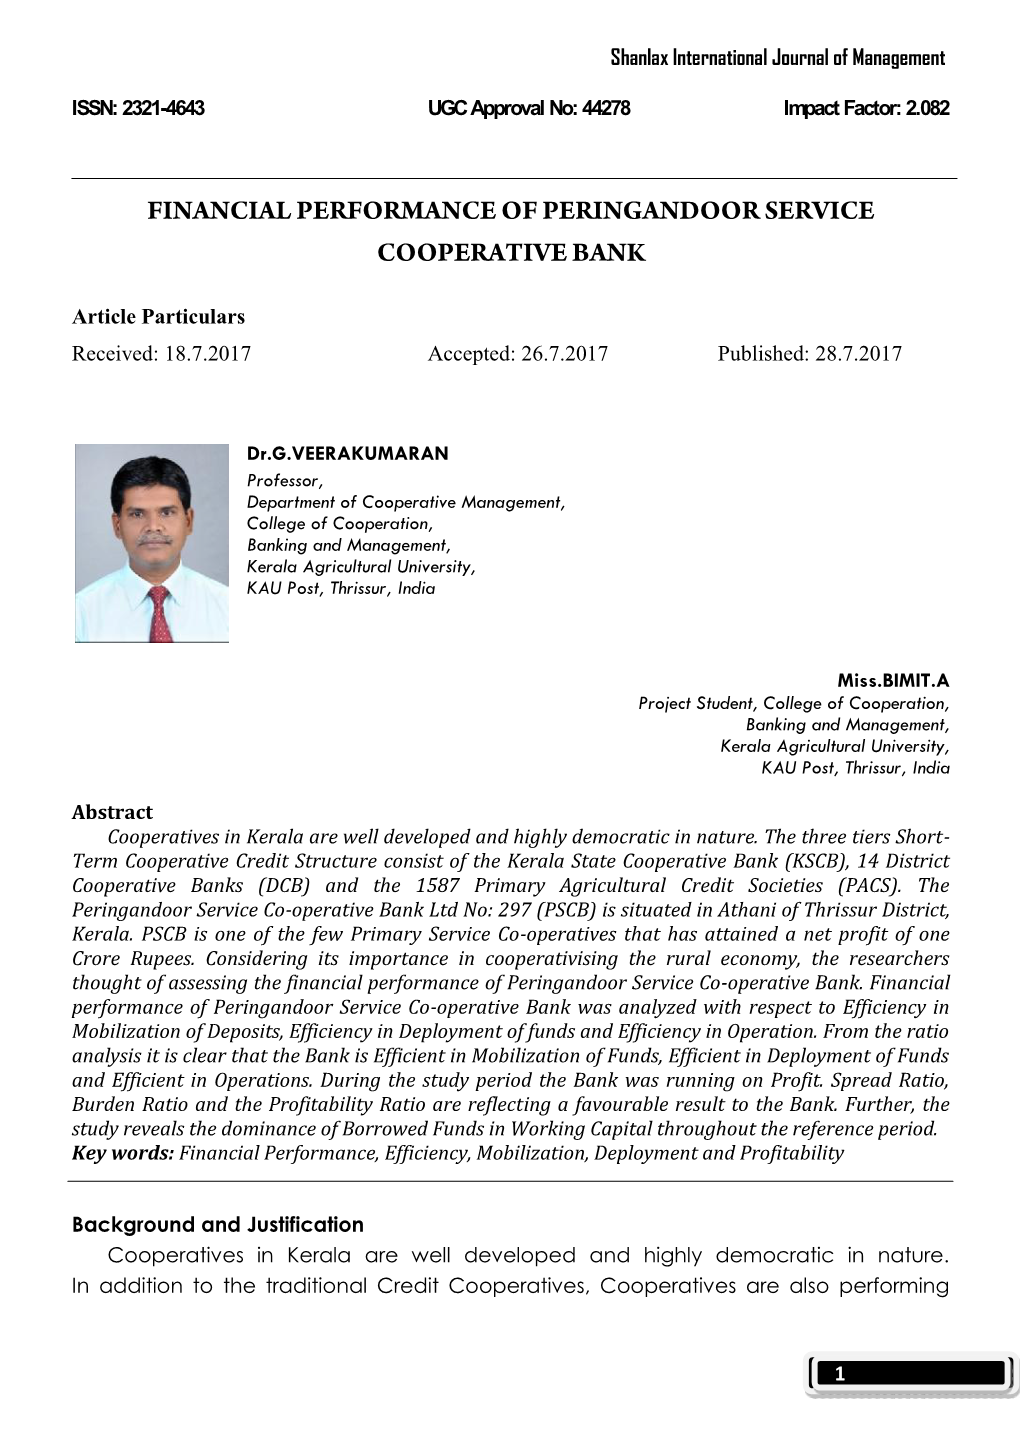 Financial Performance of Peringandoor Service Cooperative Bank